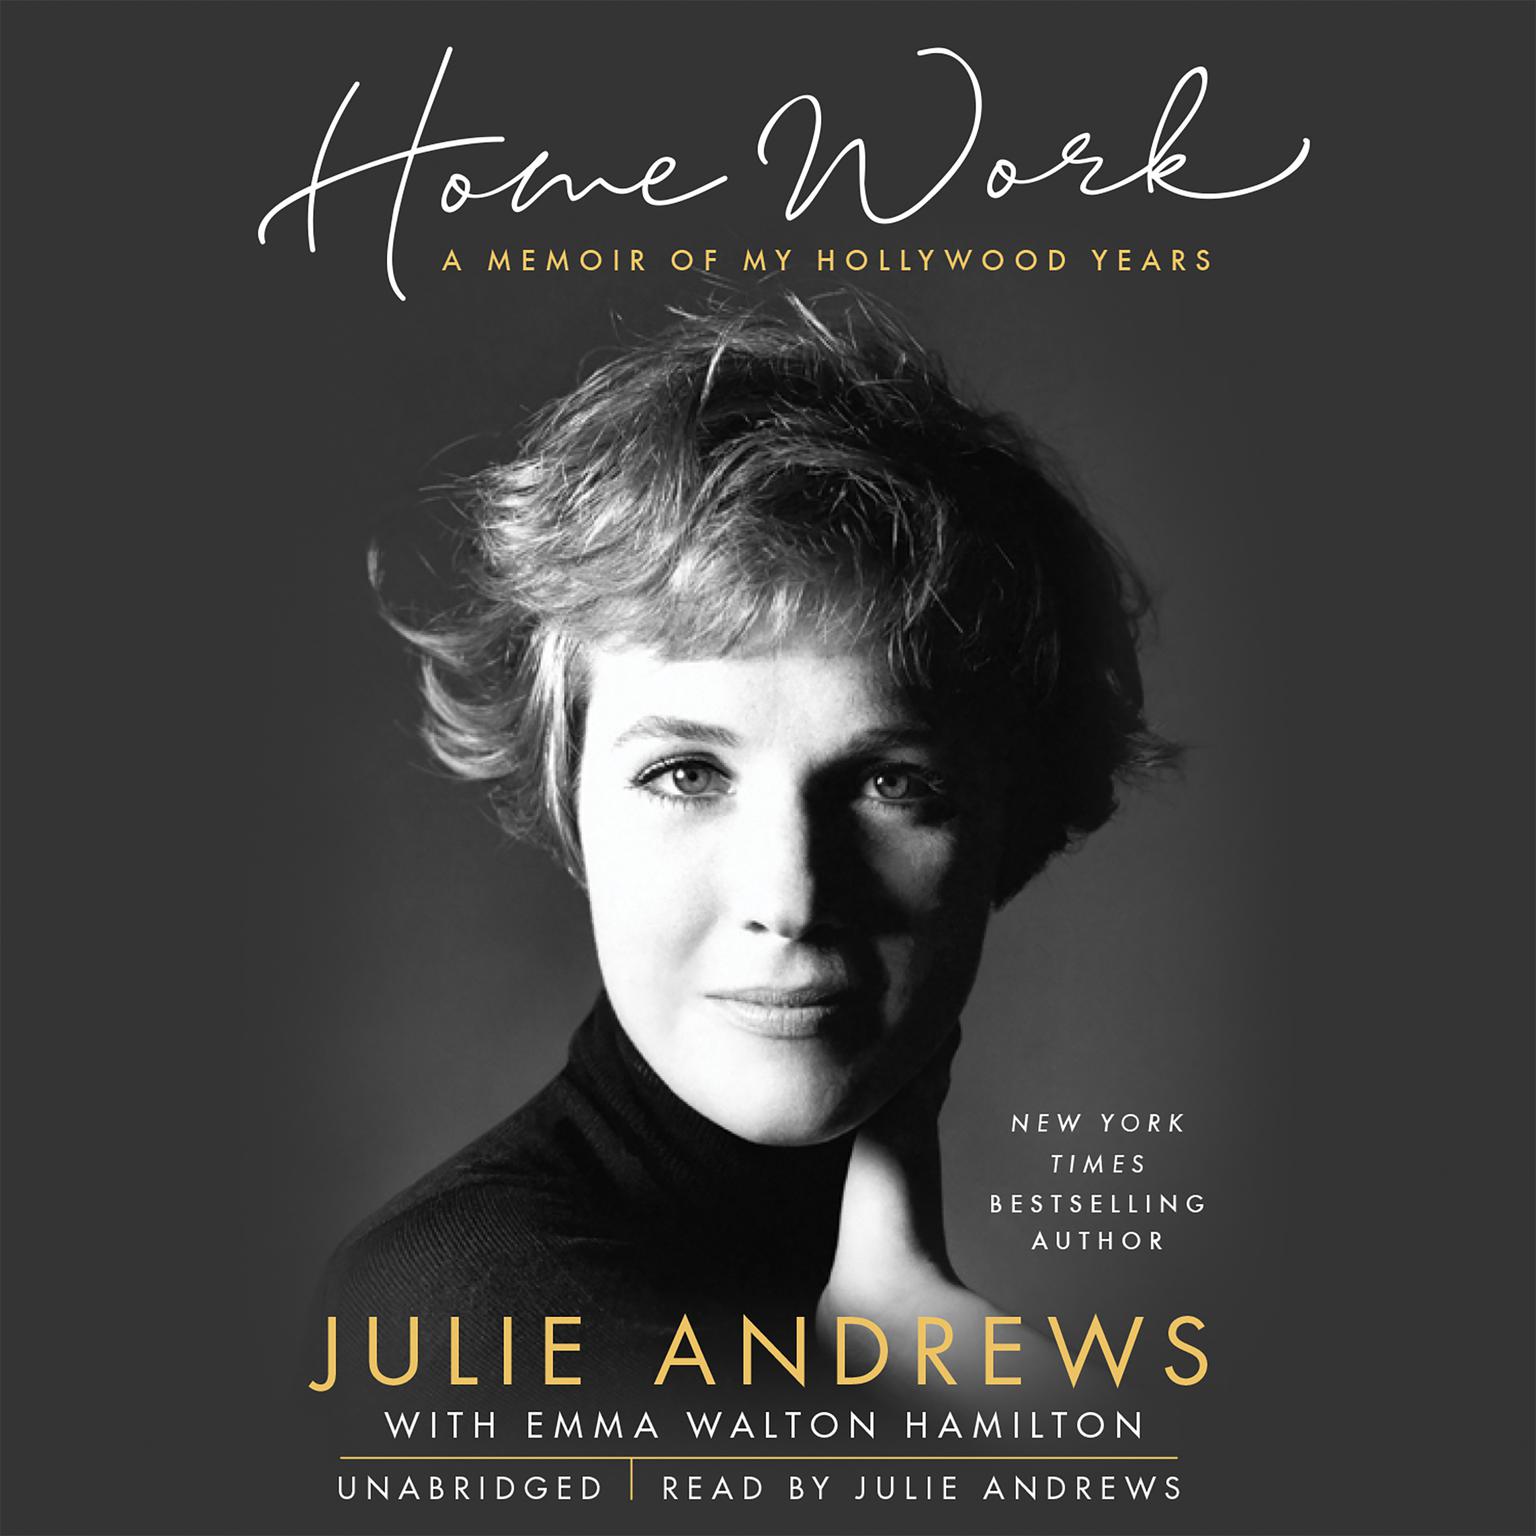 Cover image of Julie Andrews' memoir 'Home Work'